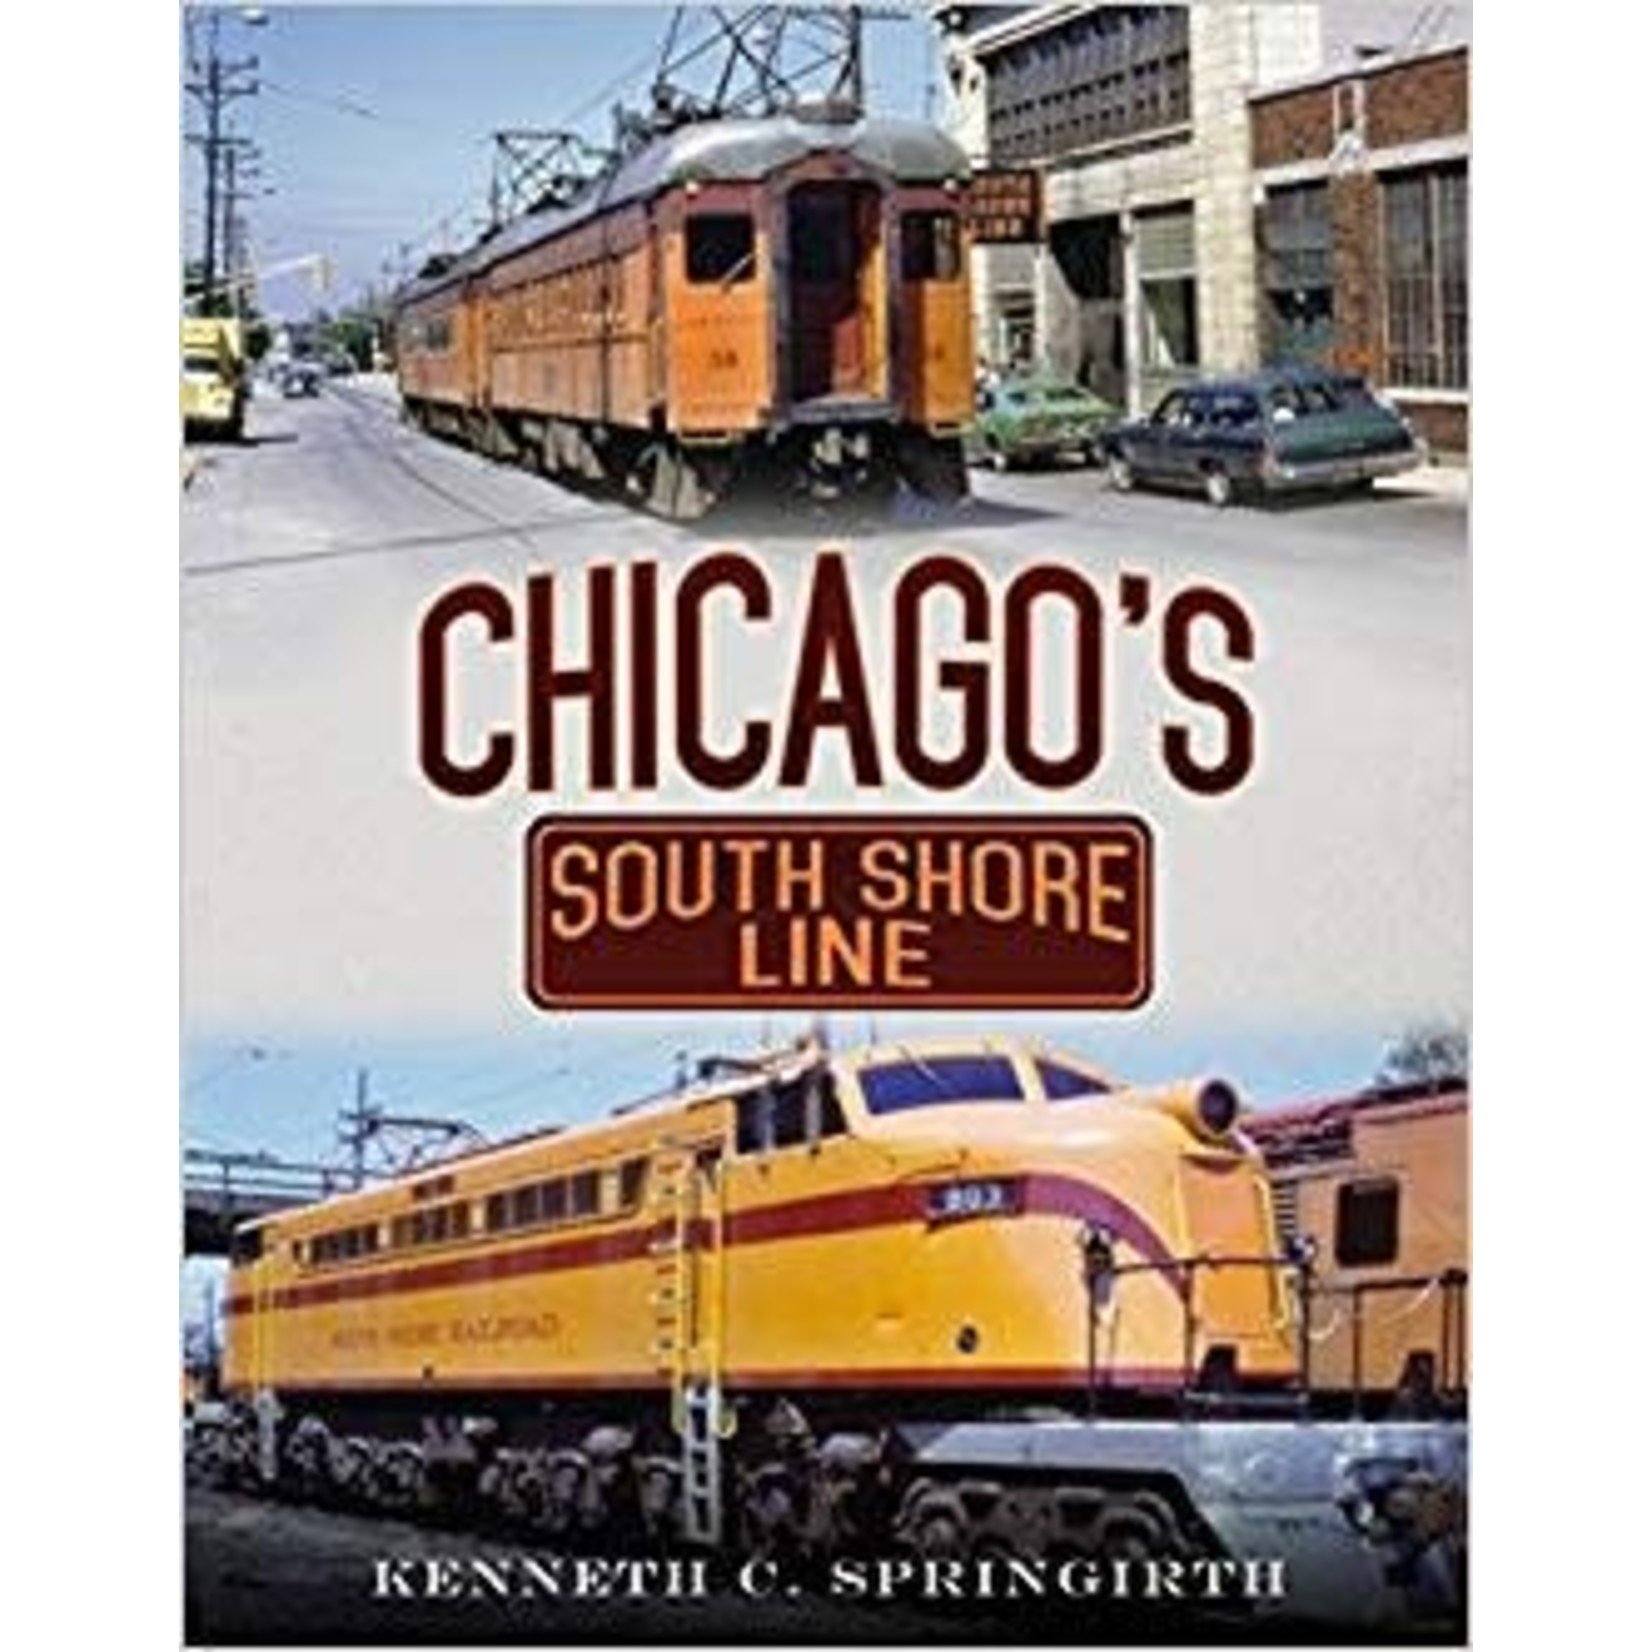 America Through Time Chicago's South Shore Line *SIGNED